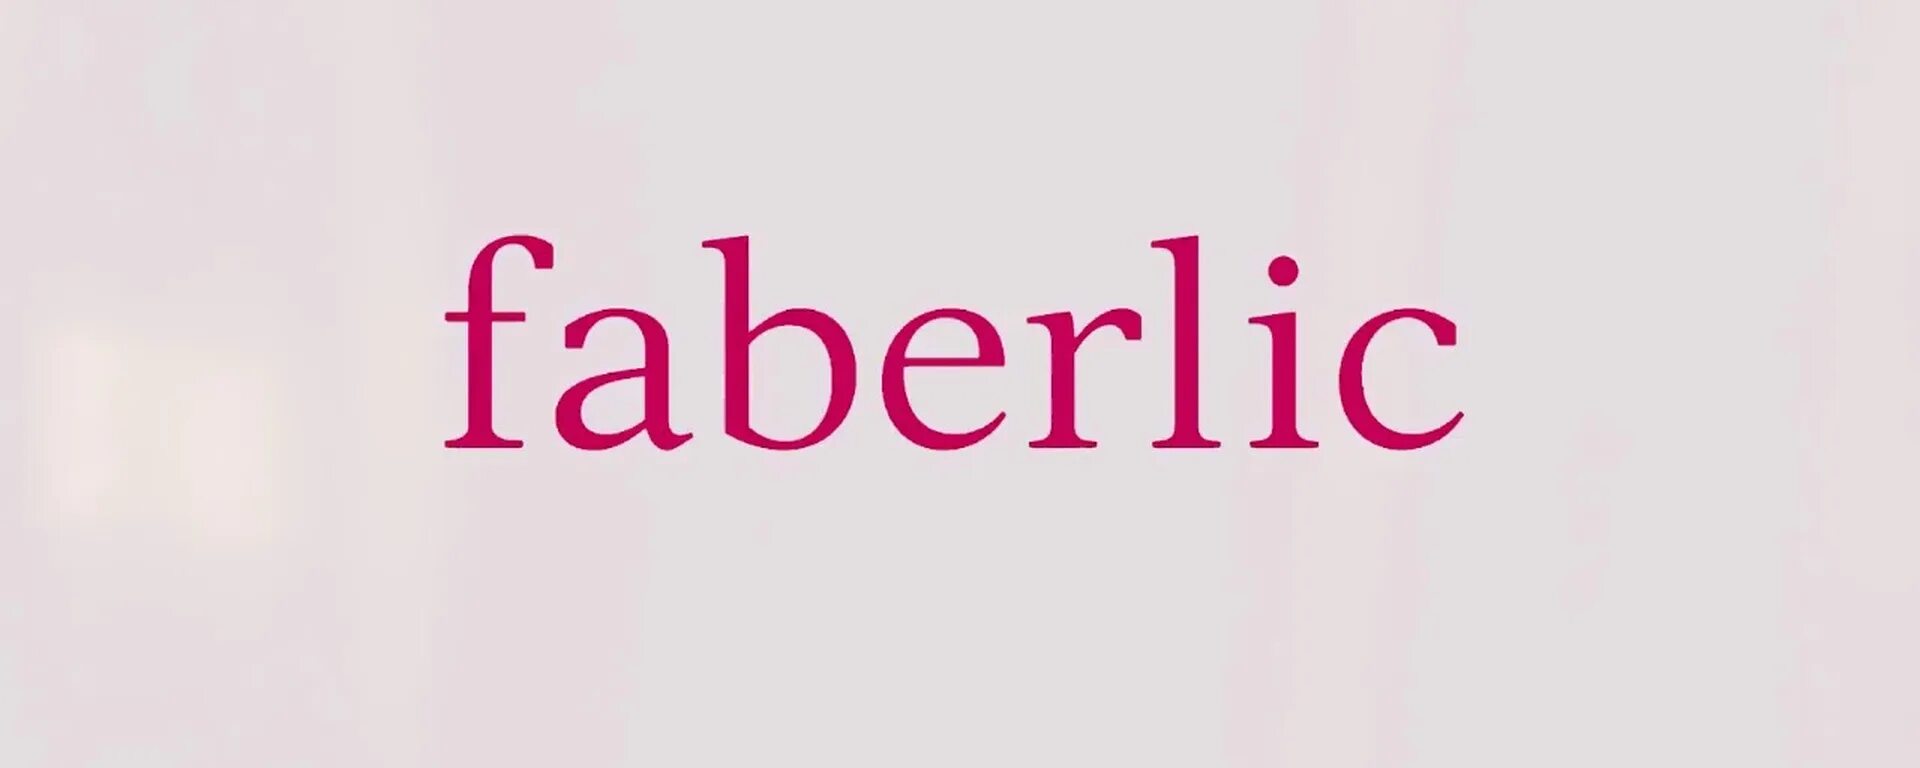 Https faberlic index php. Фаберлик логотип. Faberlic надпись. Фаберлик логотип картинки. Faberlic визитка.